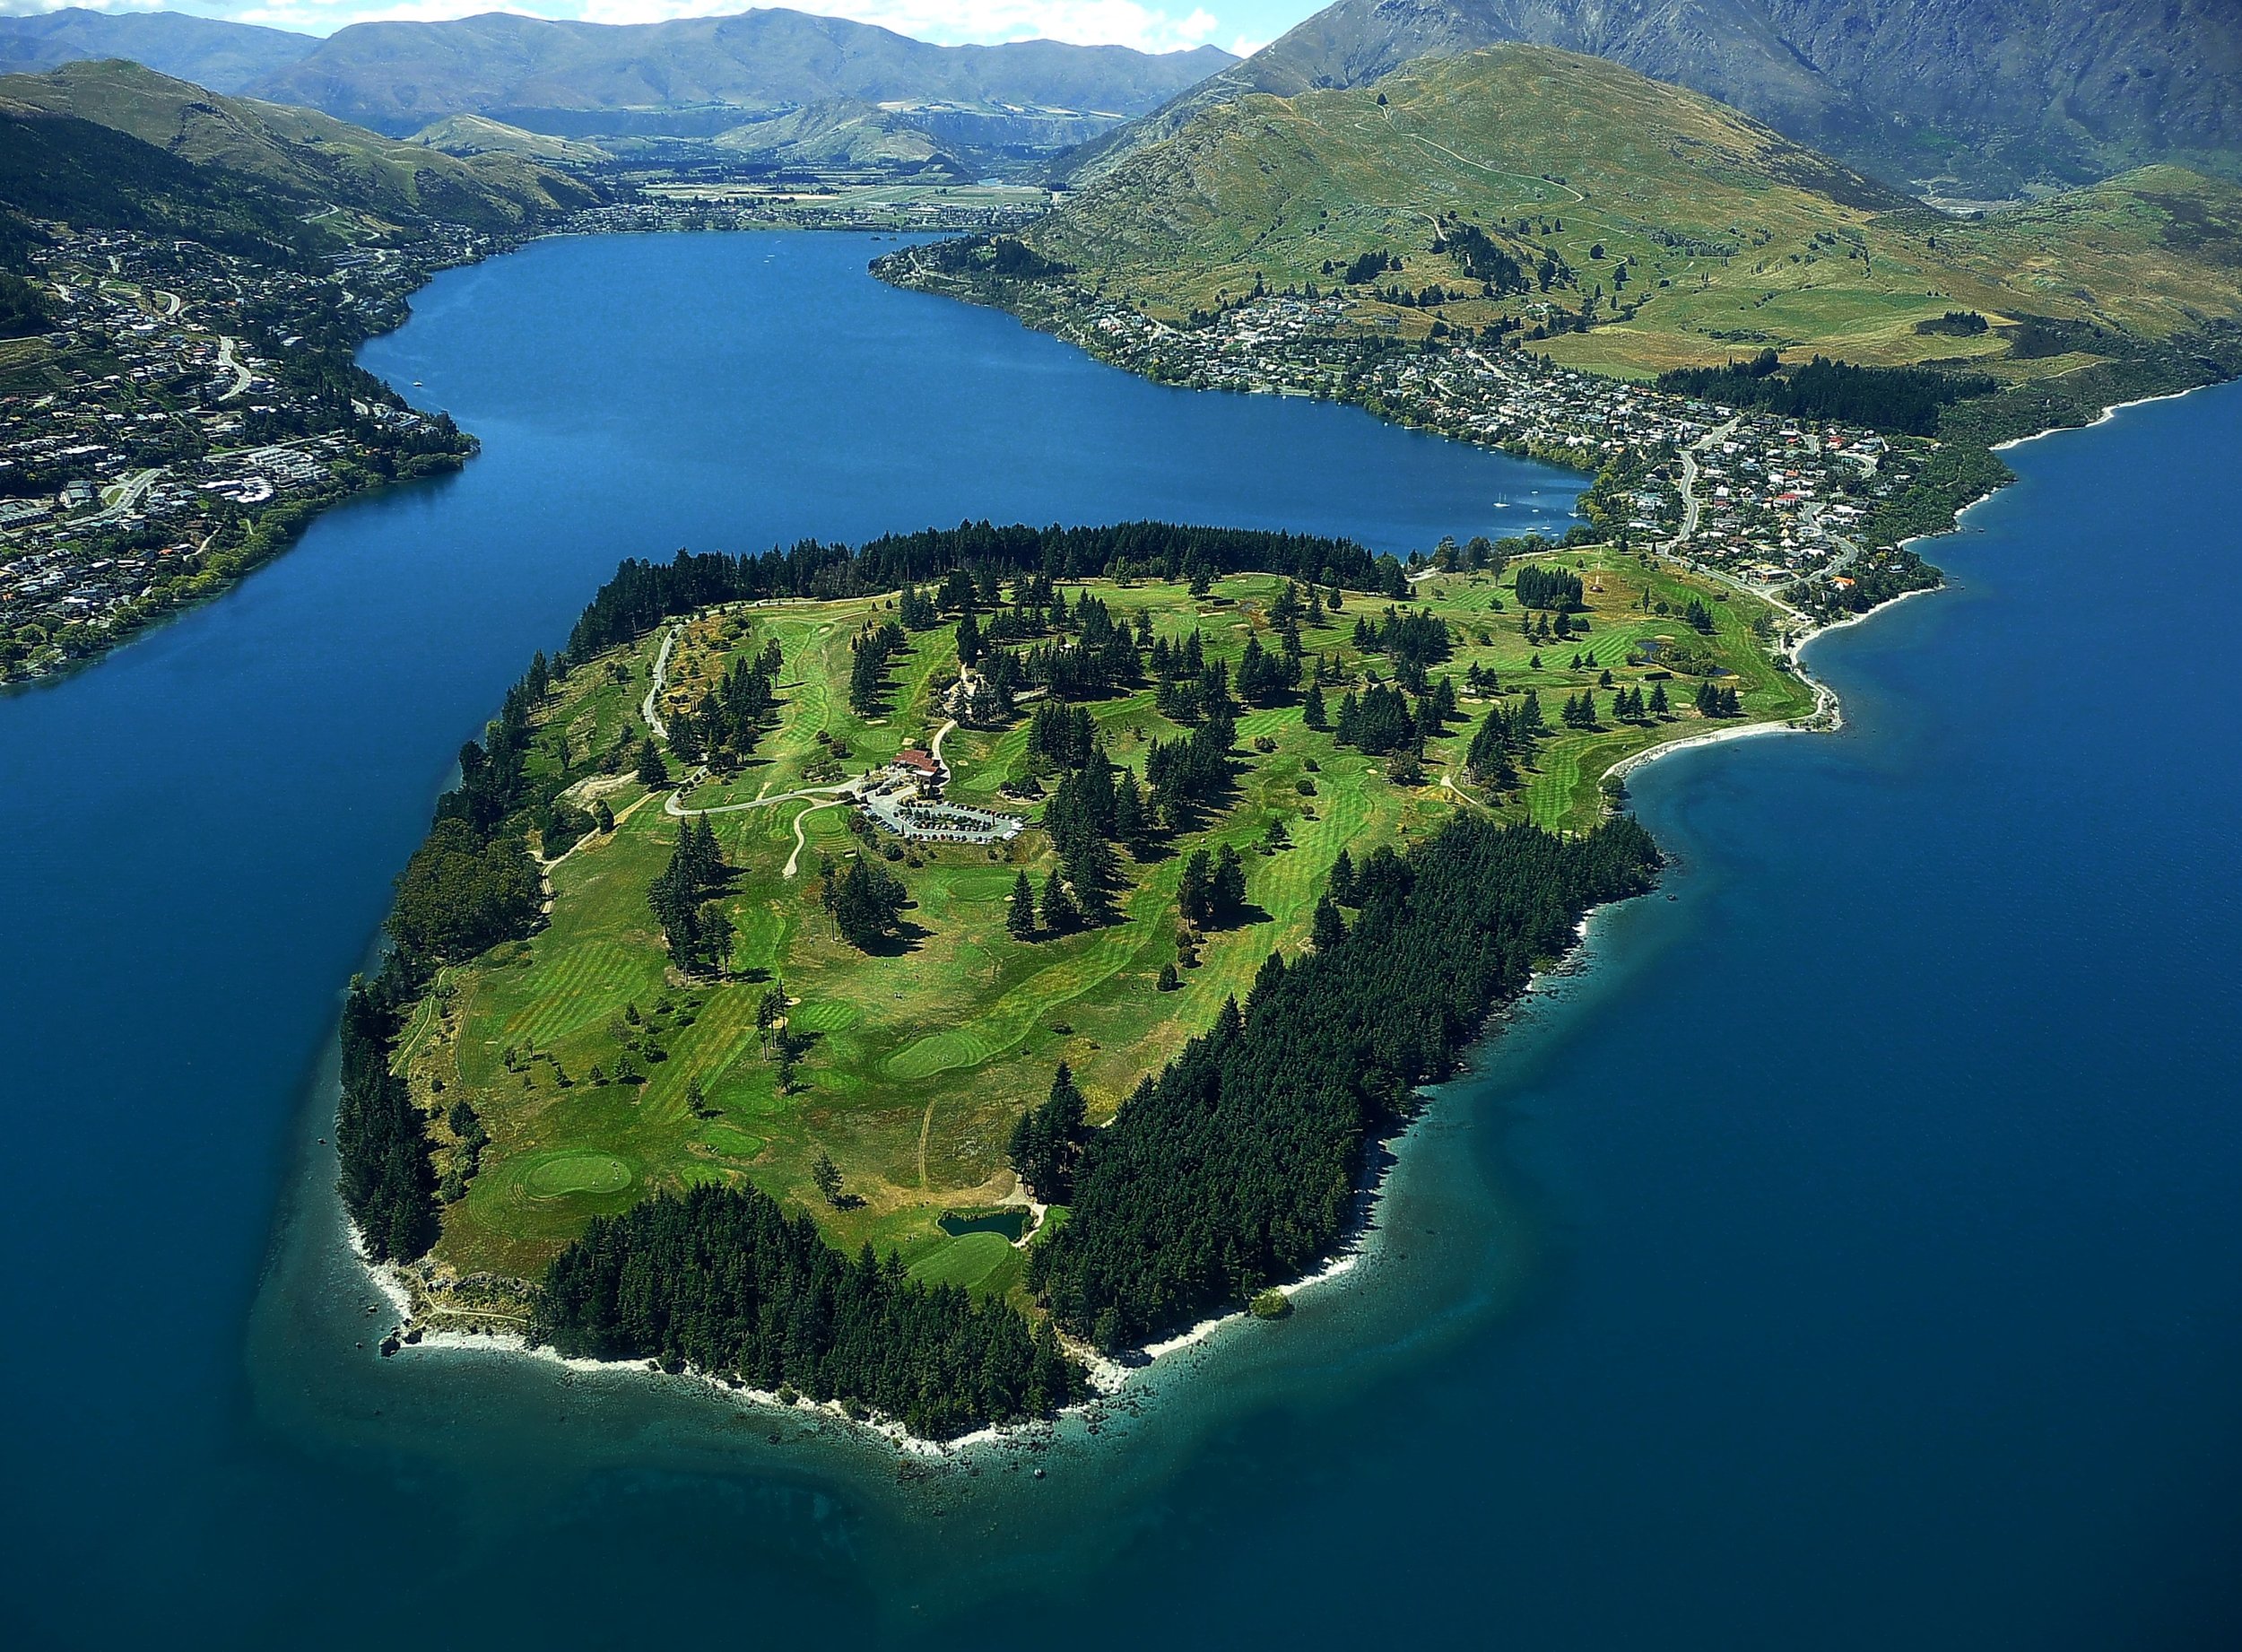 Peak Golf Queenstown | Based in Queenstown, Servicing New Zealand | Queenstown Golf Tours | New Zealand Golf Tour | Golf Tours New Zealand | Queenstown Golf Packages | New Zealand Golf Trip 